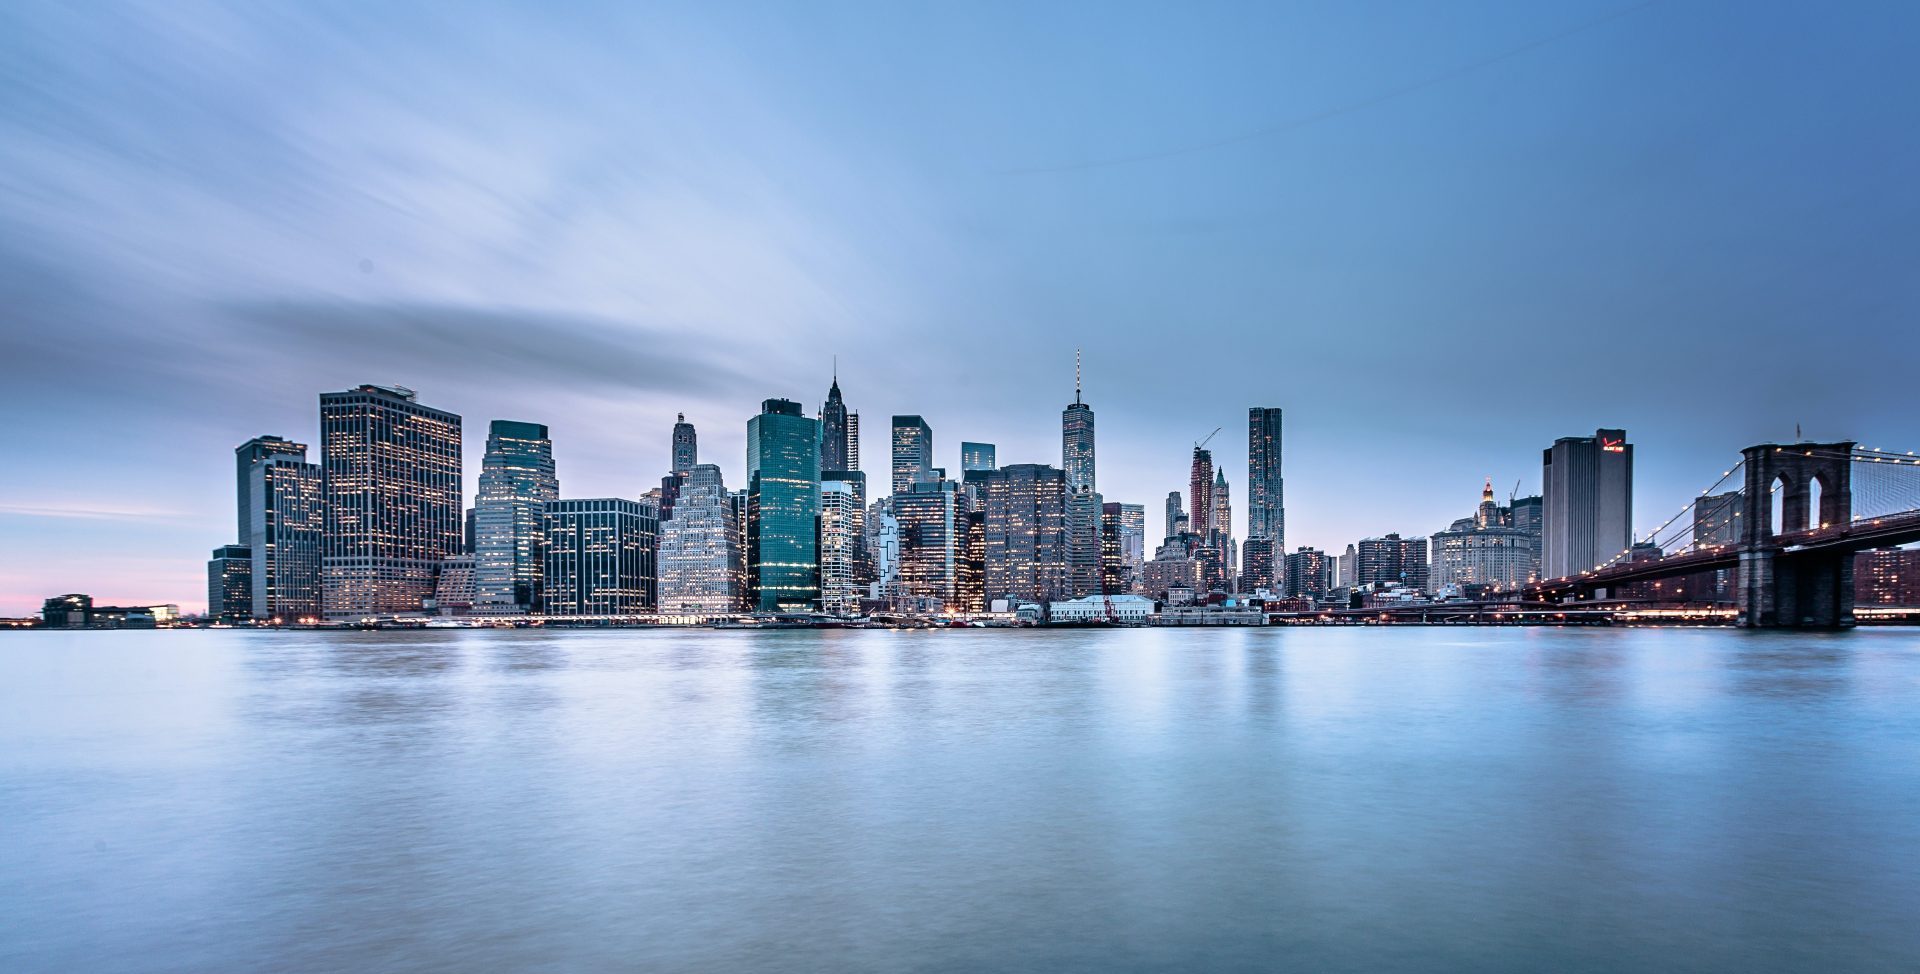 New York City skyline over the water